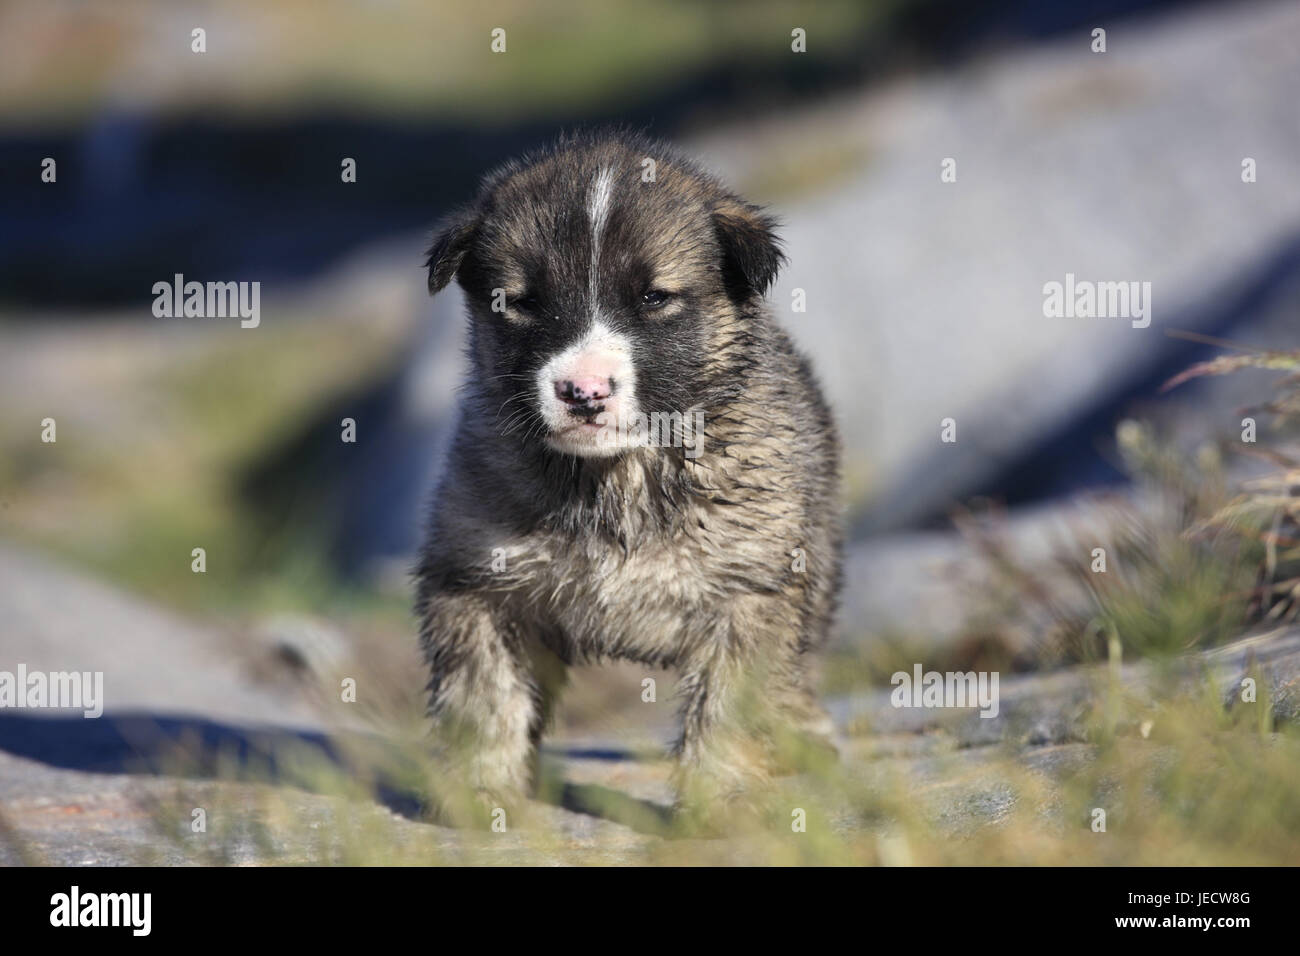 sled dog, puppy, run, Northern Greenland, animal, mammal, husky, dog, young animal, animal child, nicely, small, sweetly, fleecily, blur, Greenland, Uummannaq, Stock Photo